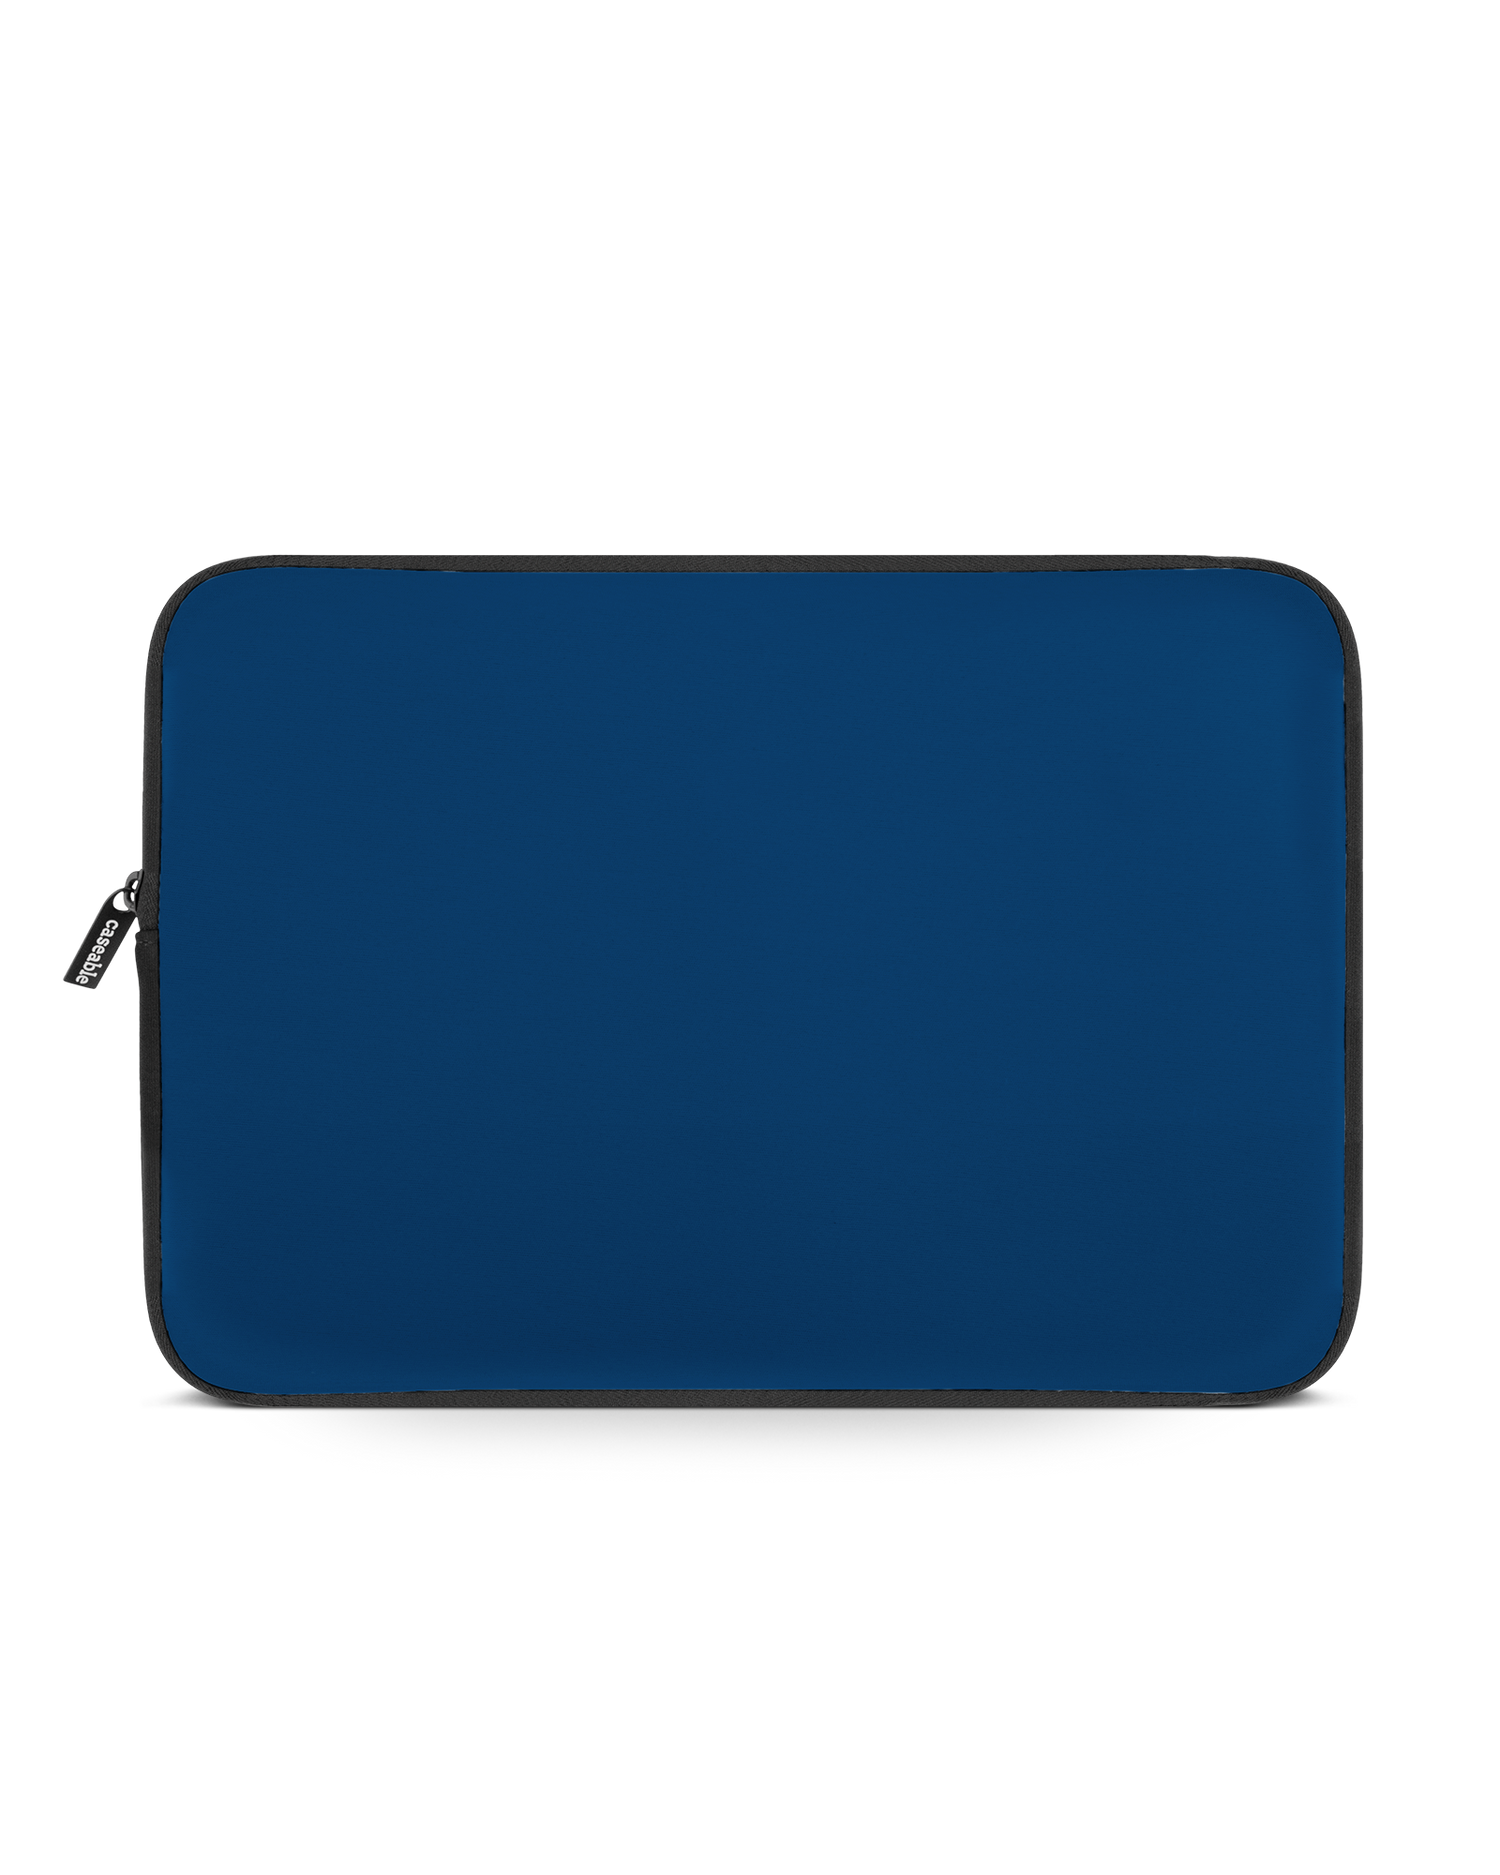 CLASSIC BLUE Laptophülle 14 Zoll: Vorderansicht